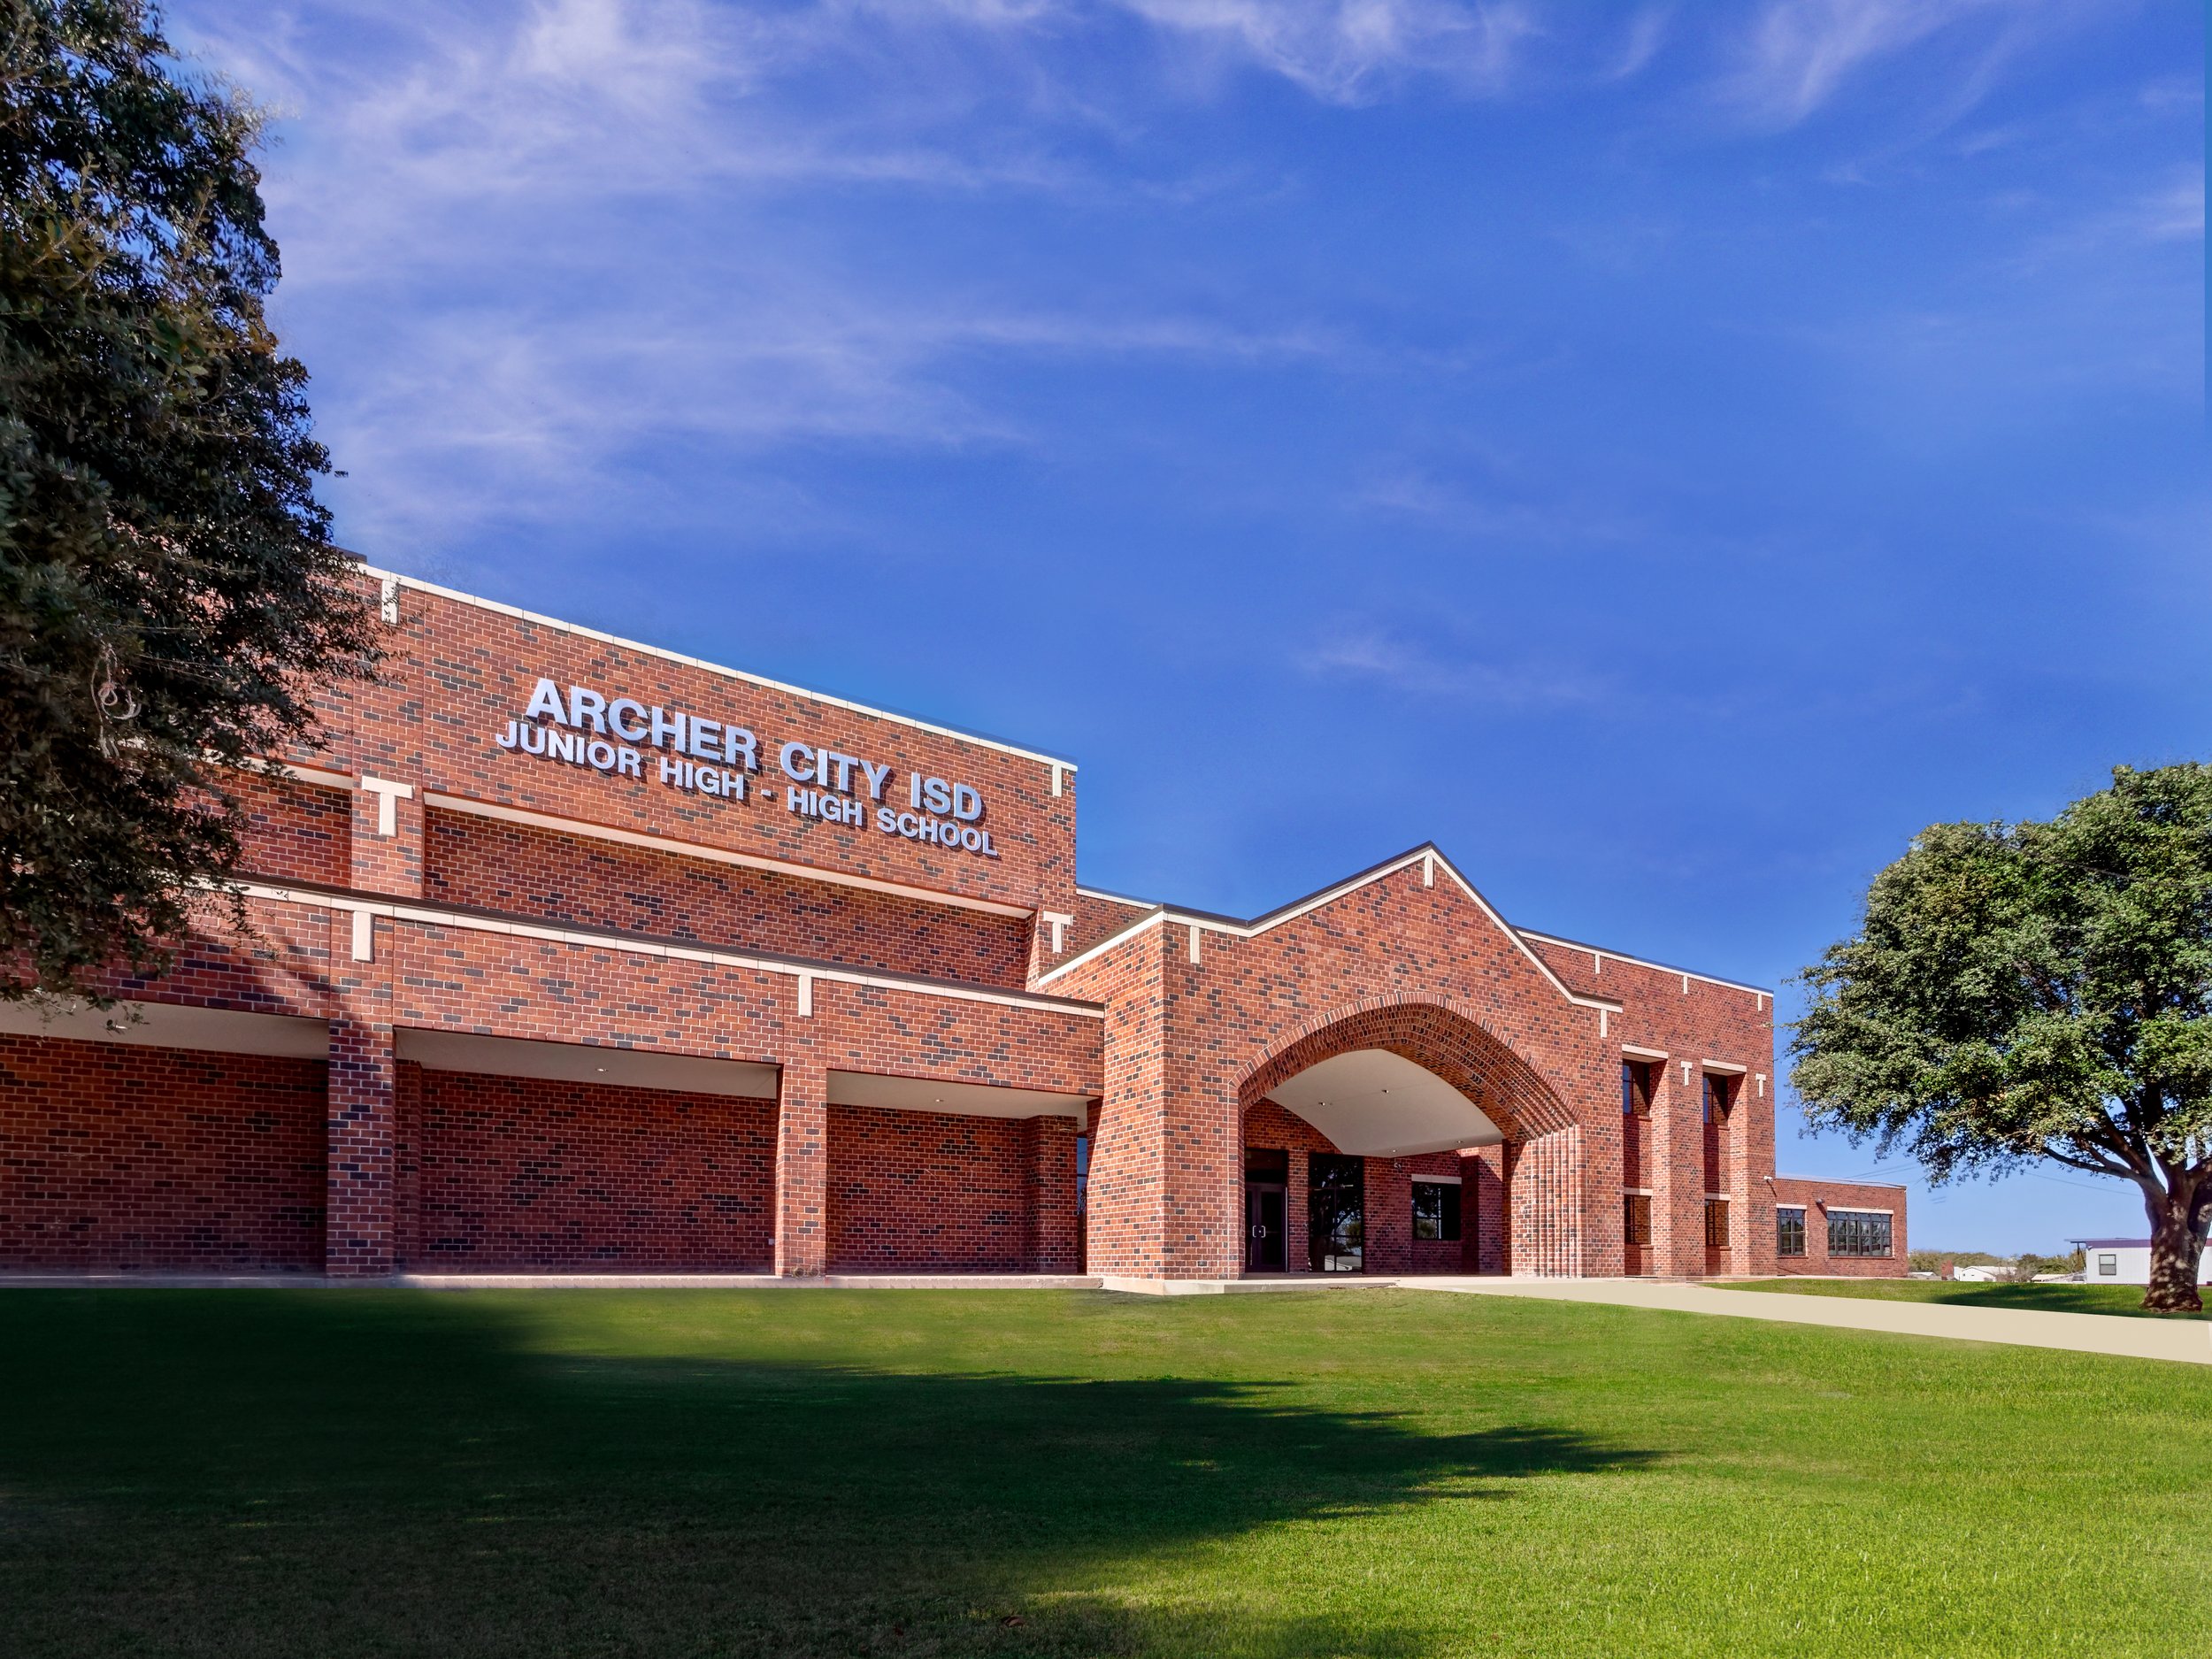 Archer City JR/SR High School